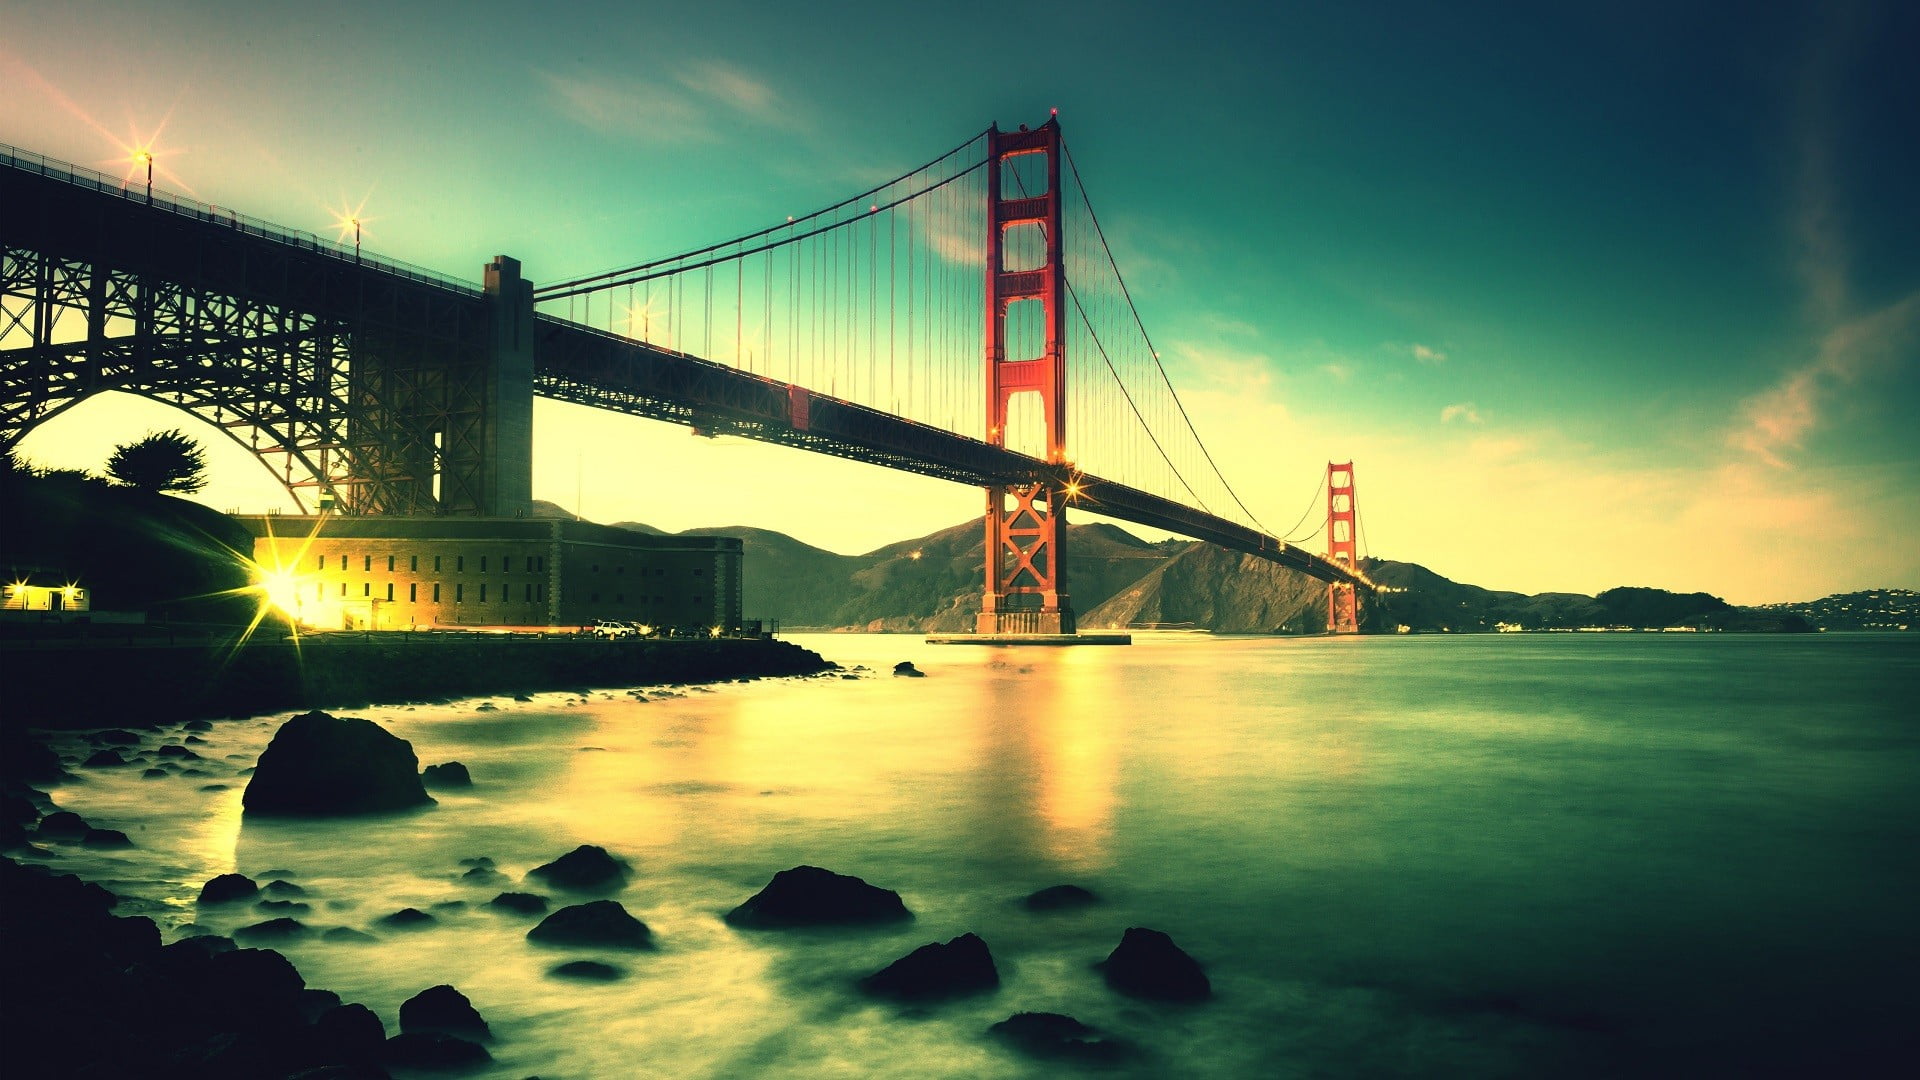 black and brown wooden boat, Golden Gate Bridge, San Francisco, USA, bridge